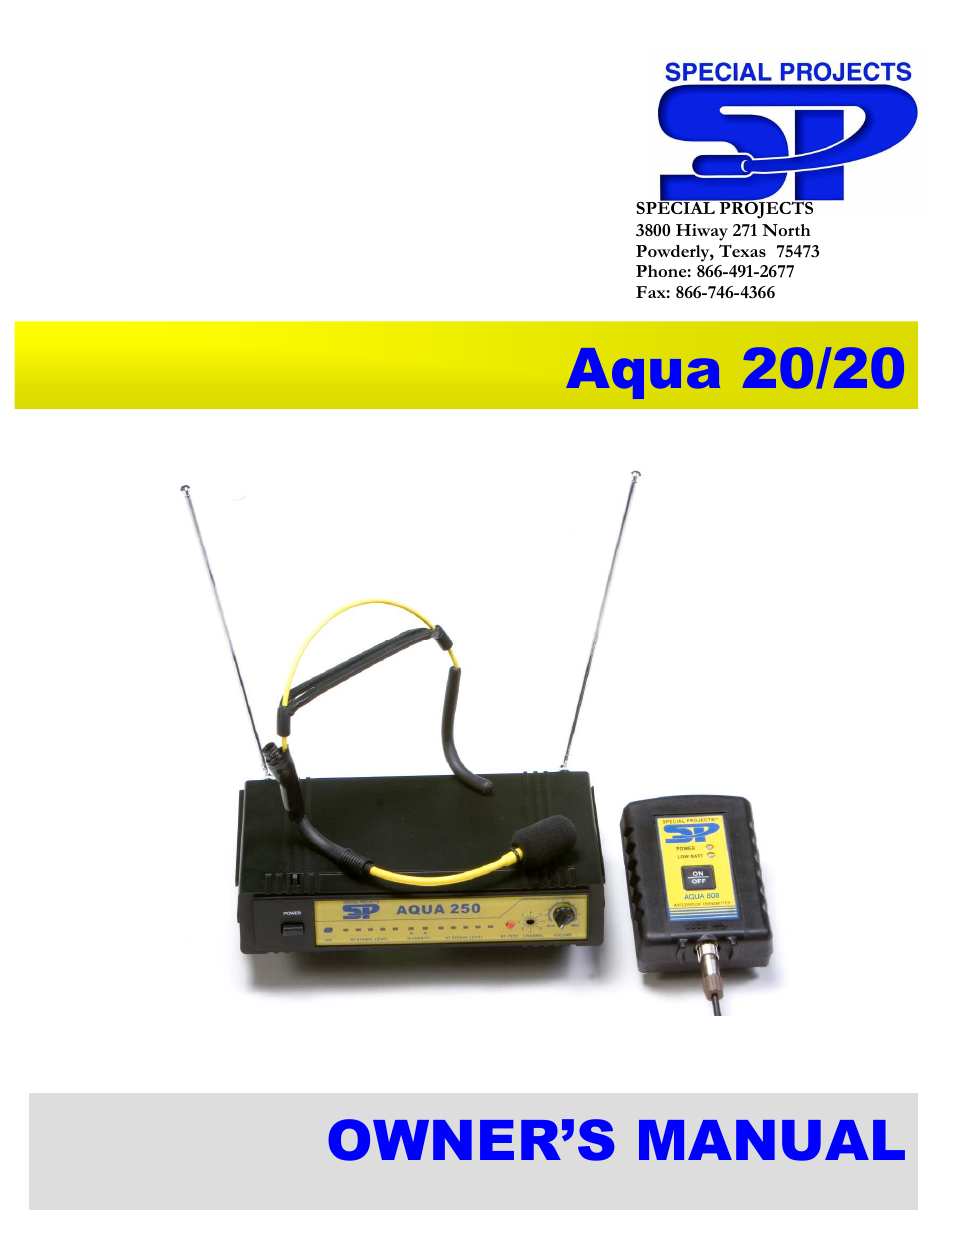 Aqua 20/20 Submersible Wireless